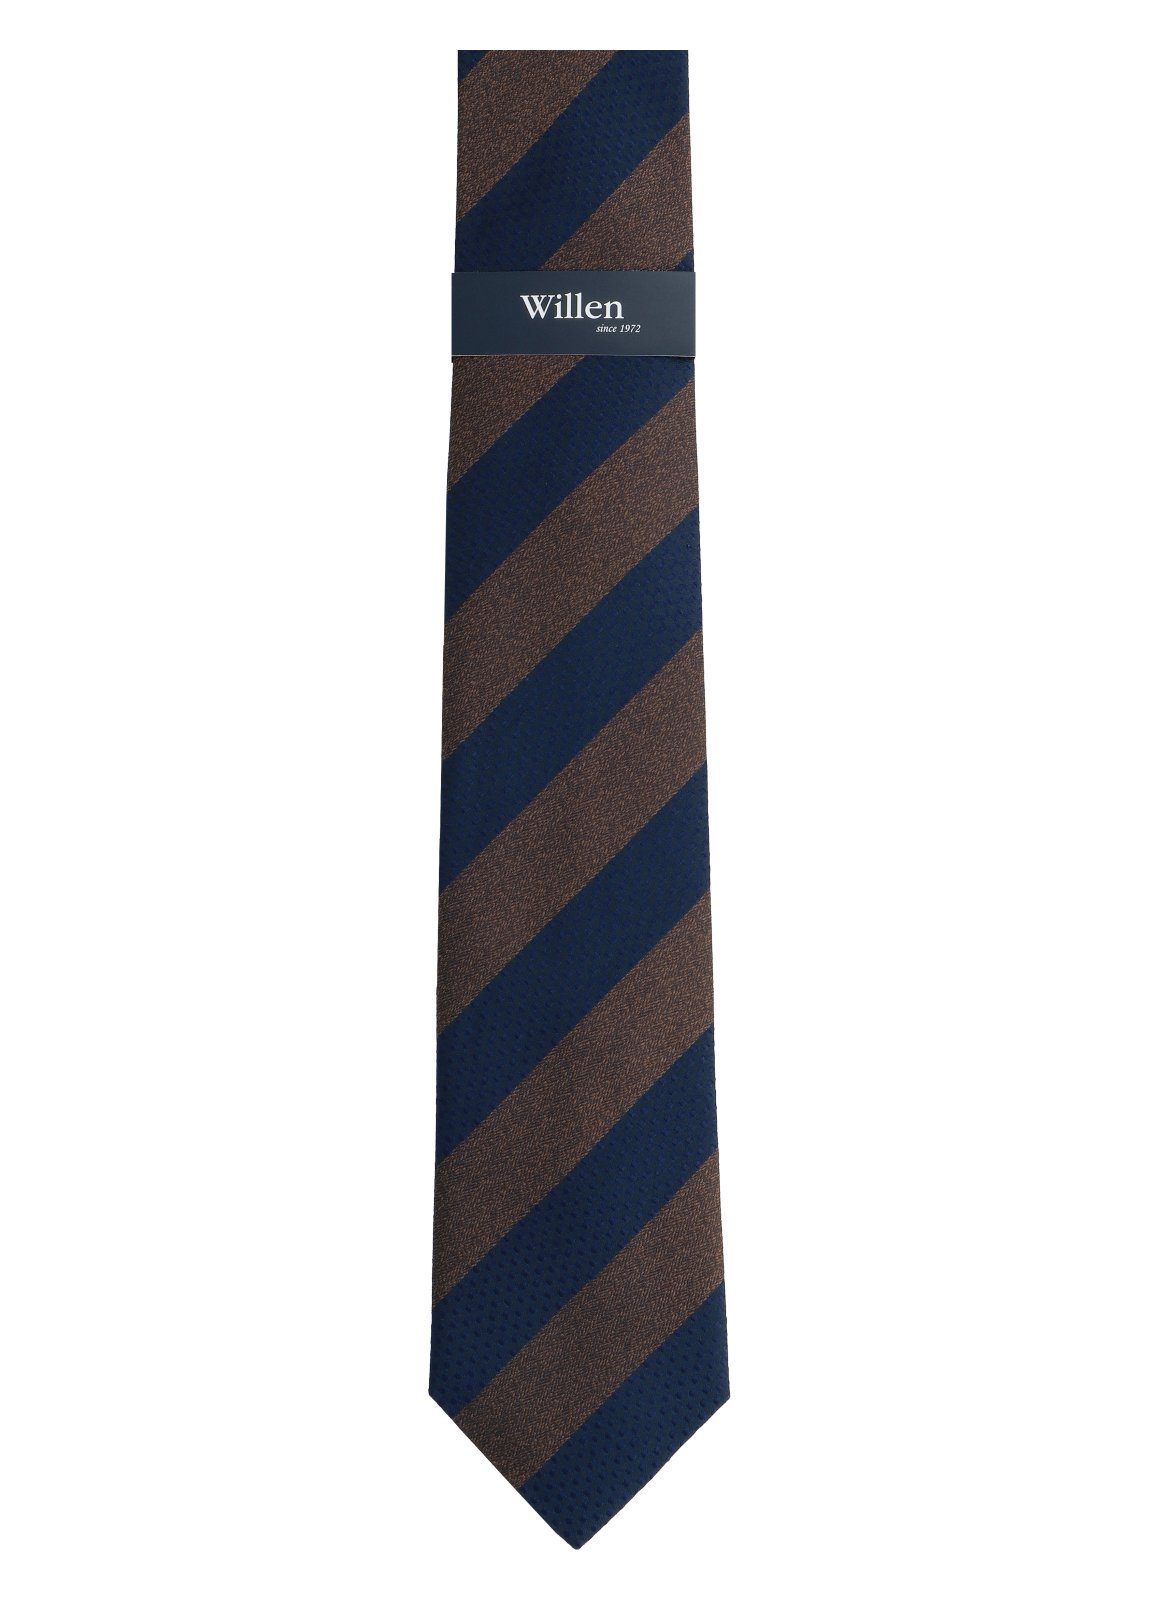 WILLEN Krawatte schoko